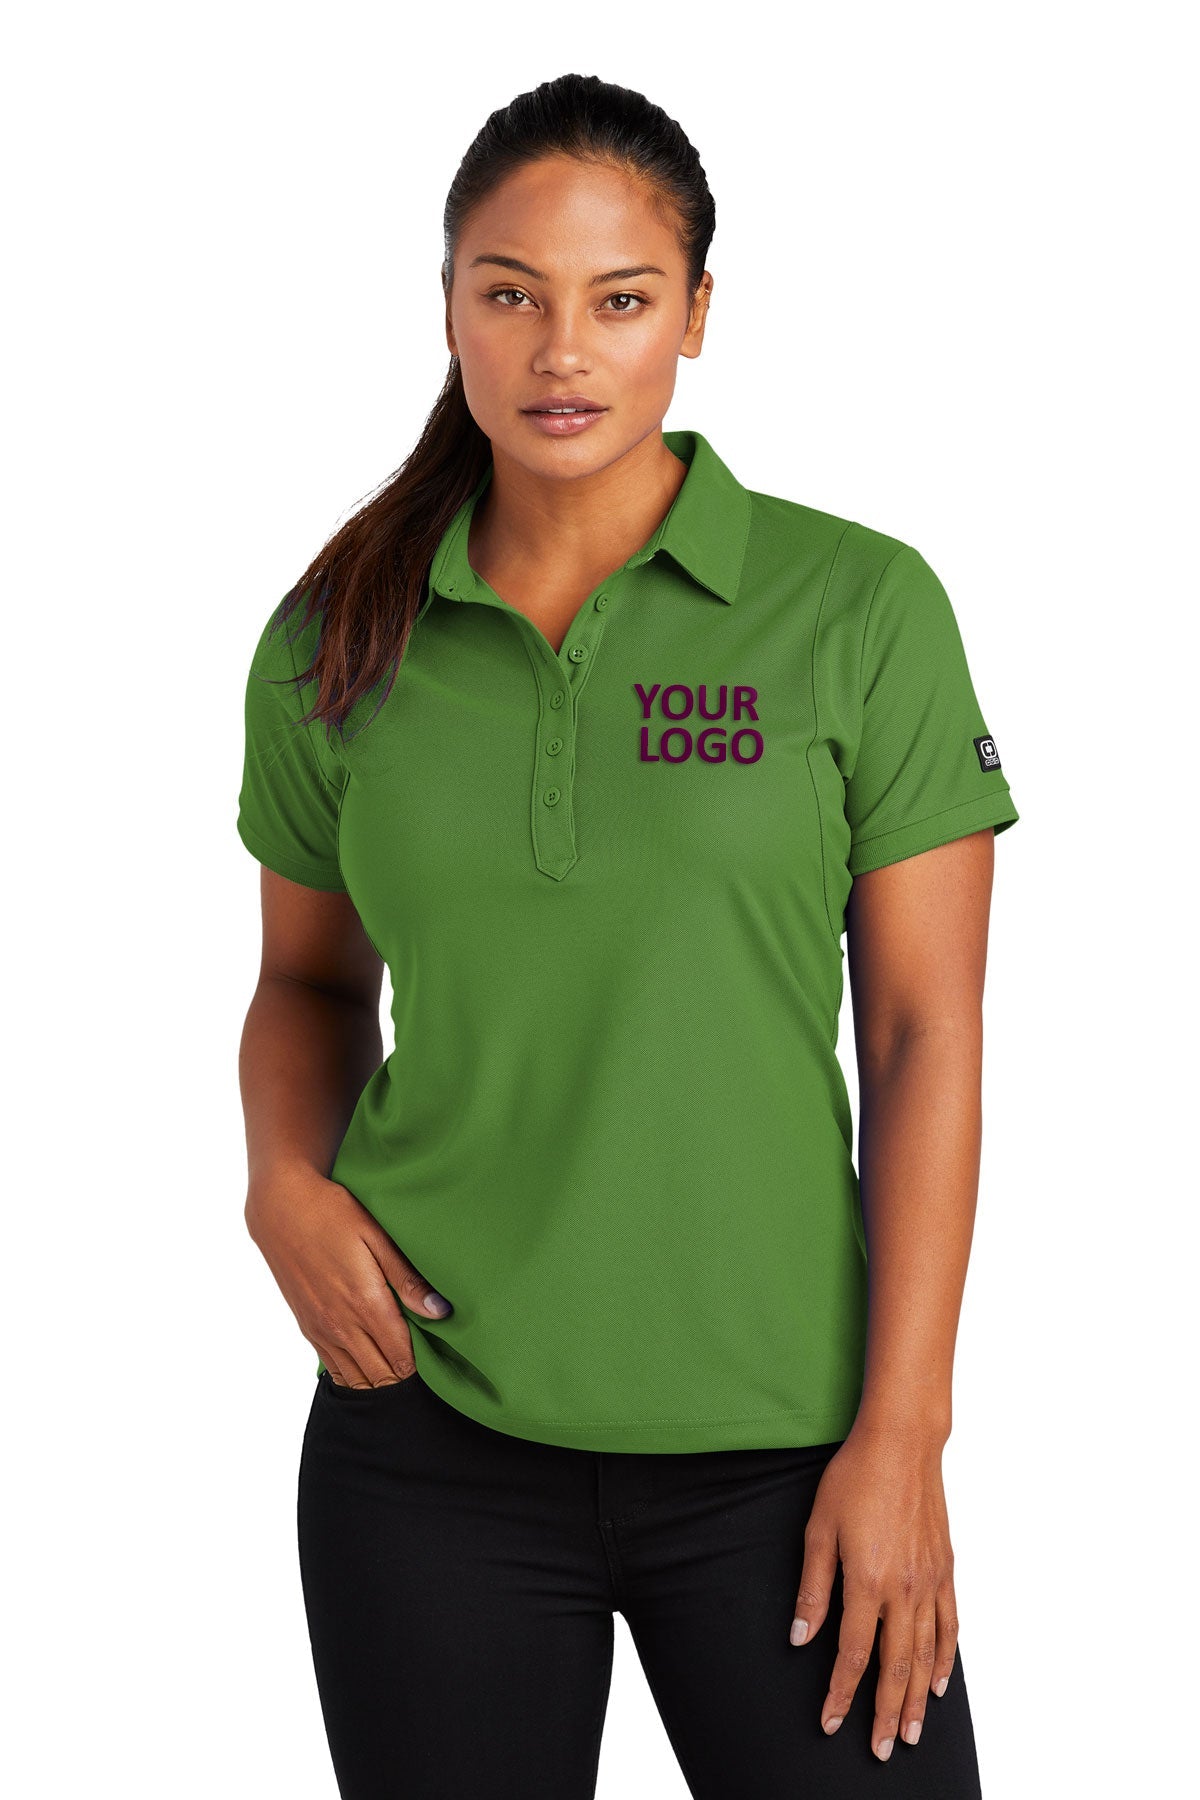 OGIO Gridiron Green LOG101 corporate logo polo shirts